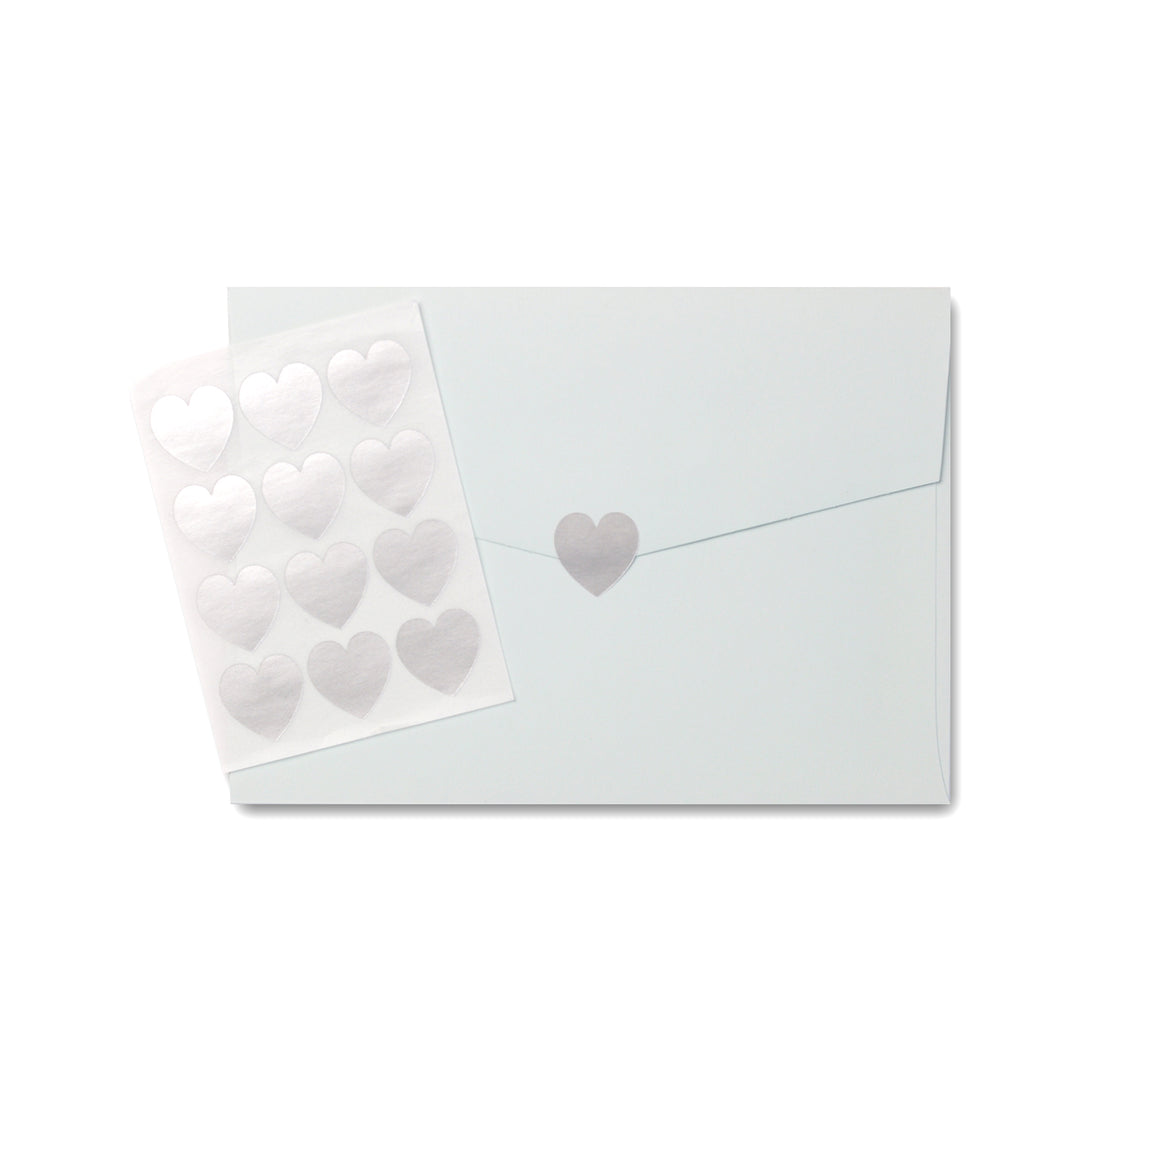 Mini silver heart sticker seals. Metallic silver heart stickers 48 pack.